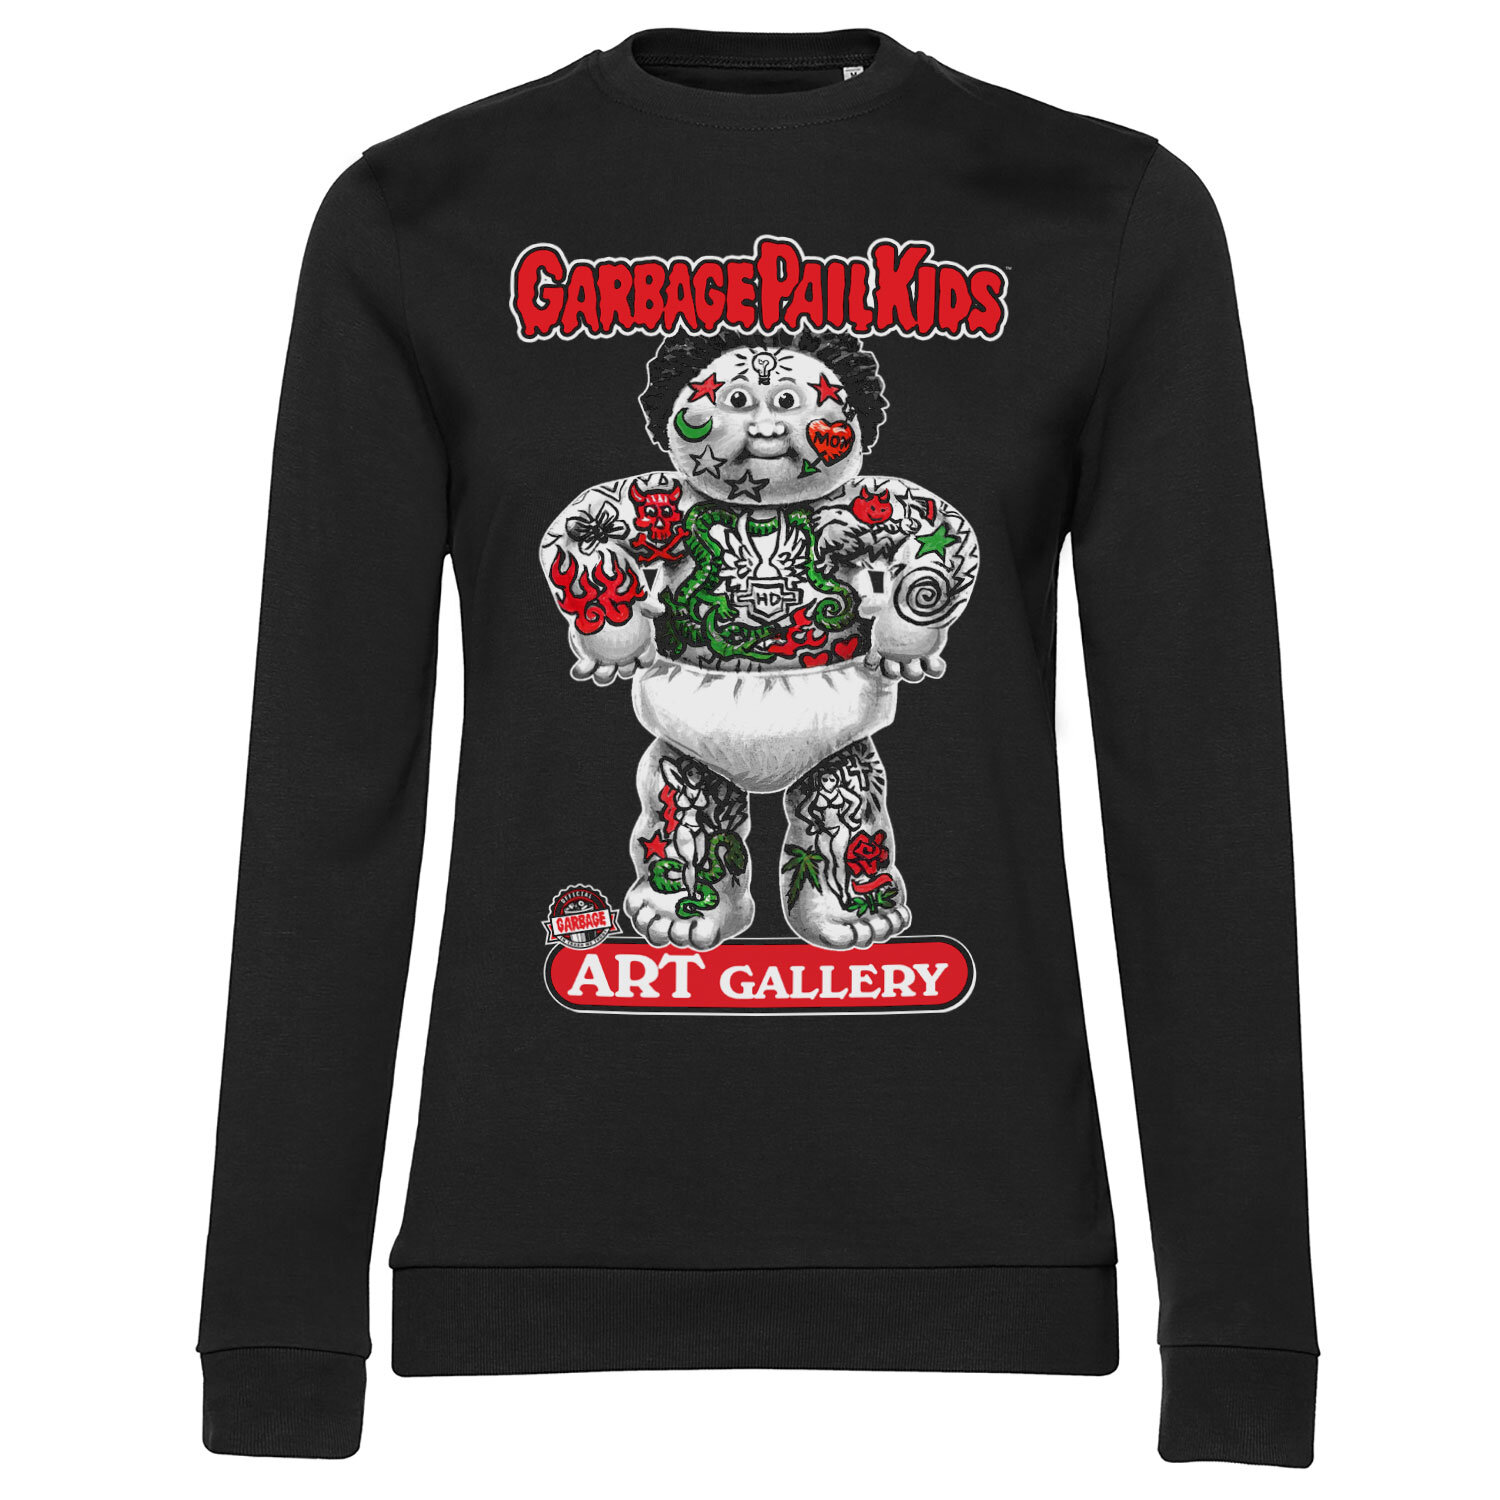 Art Gallery Girly Sweatshirt